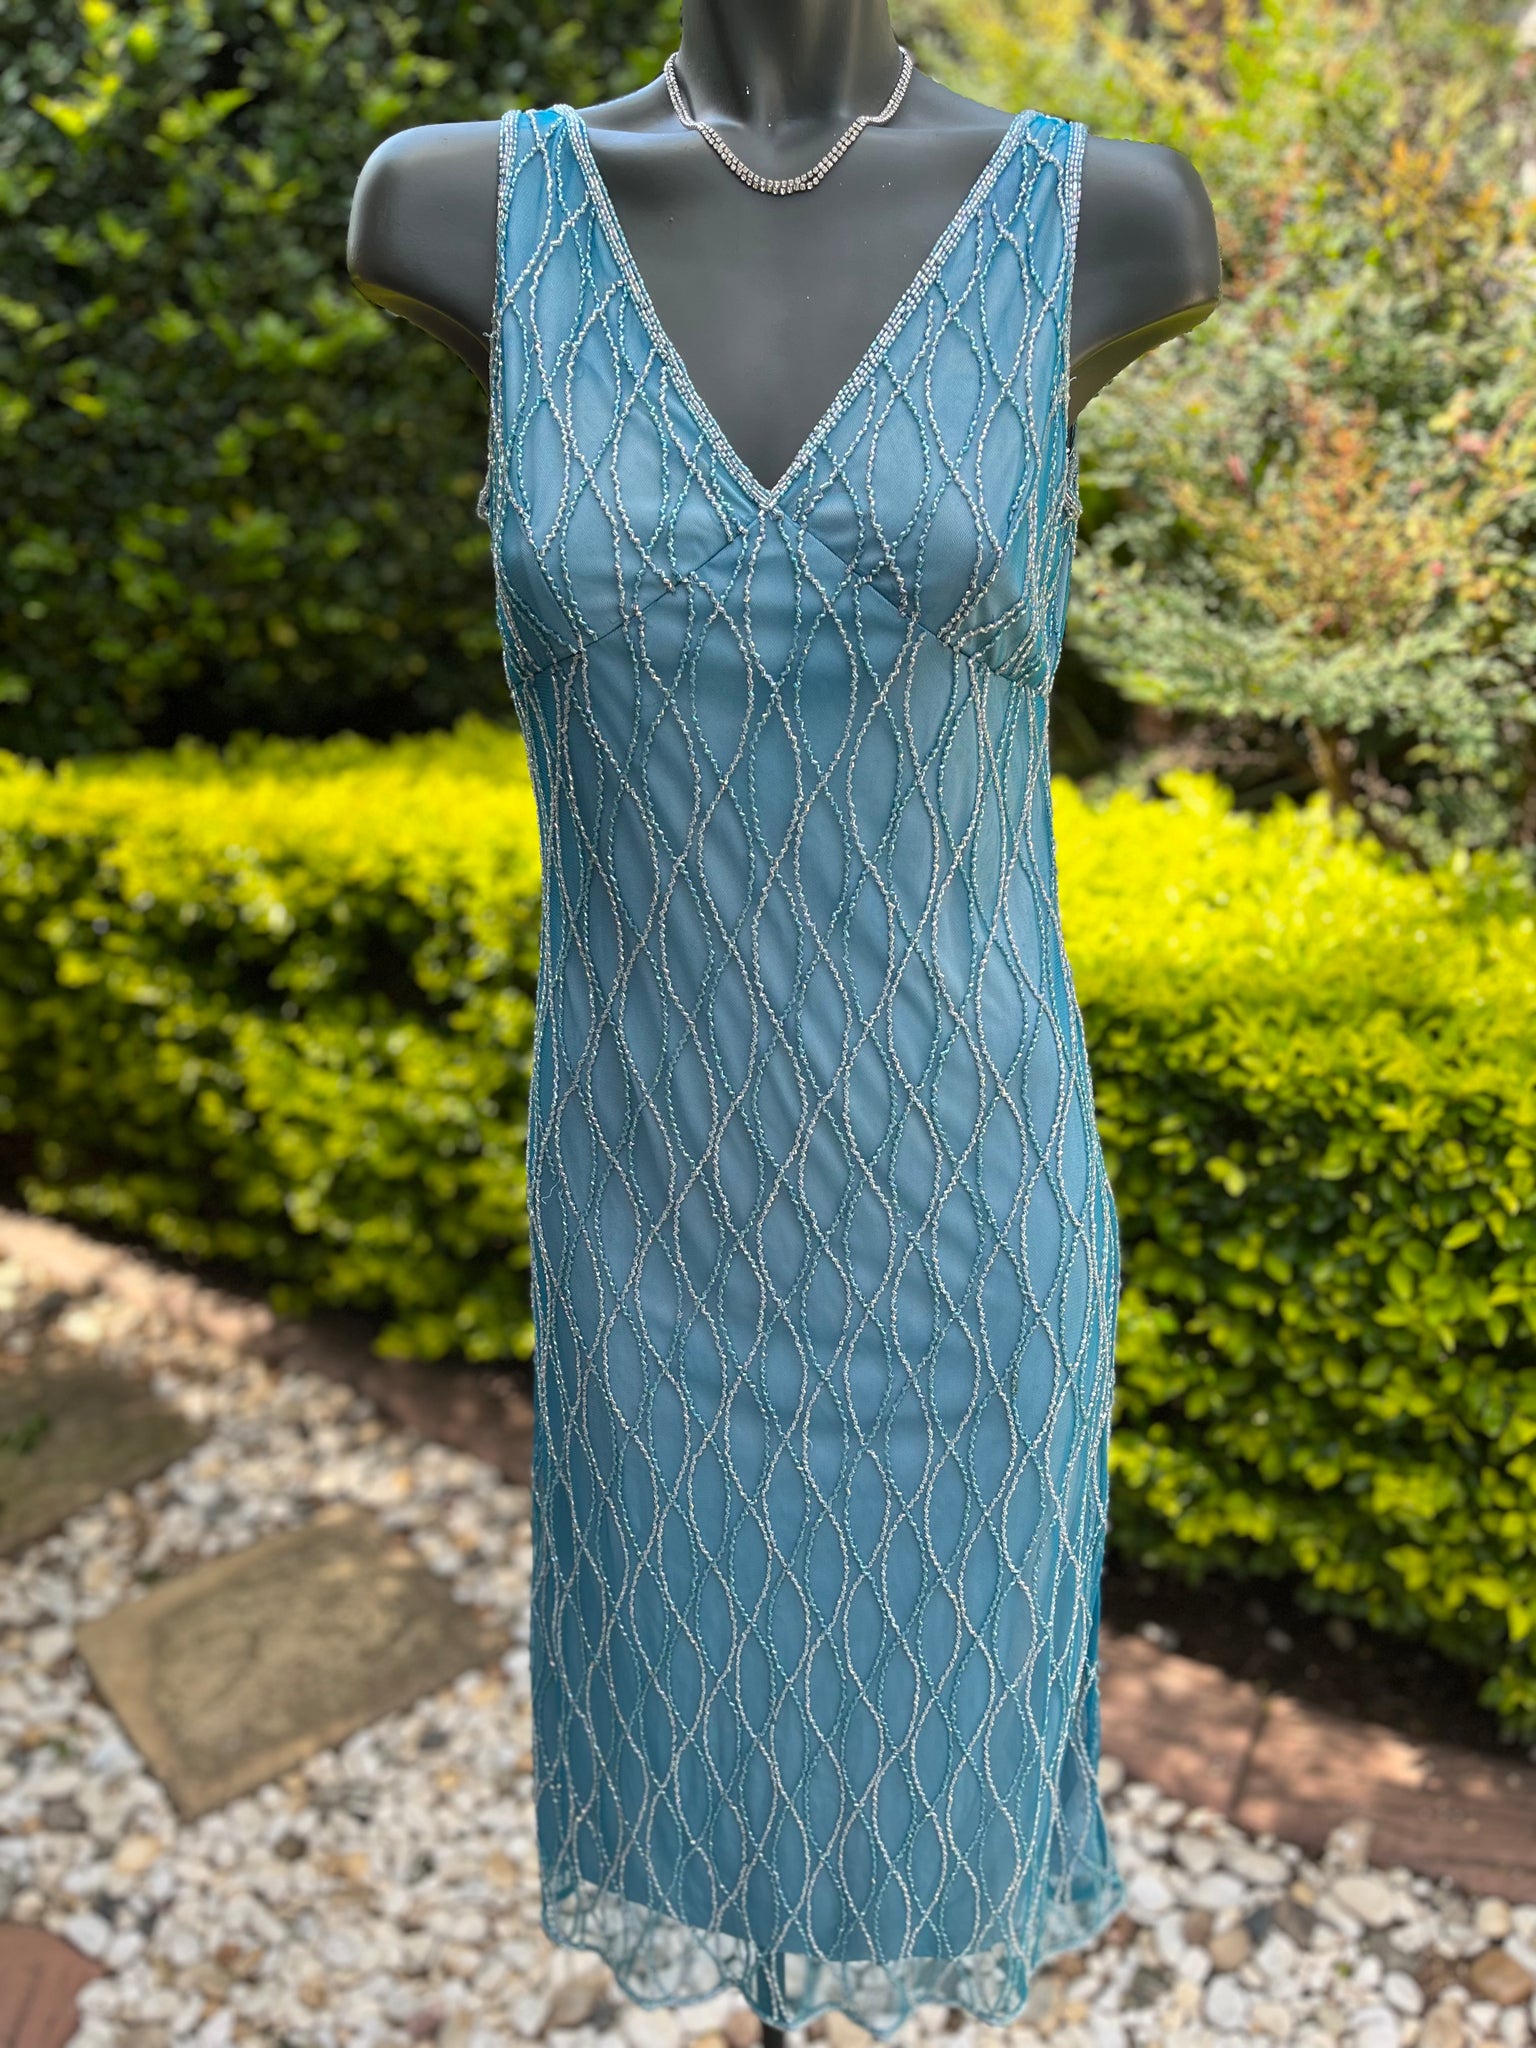 Formal Blue Beaded Detail Evening Dress - Size 10